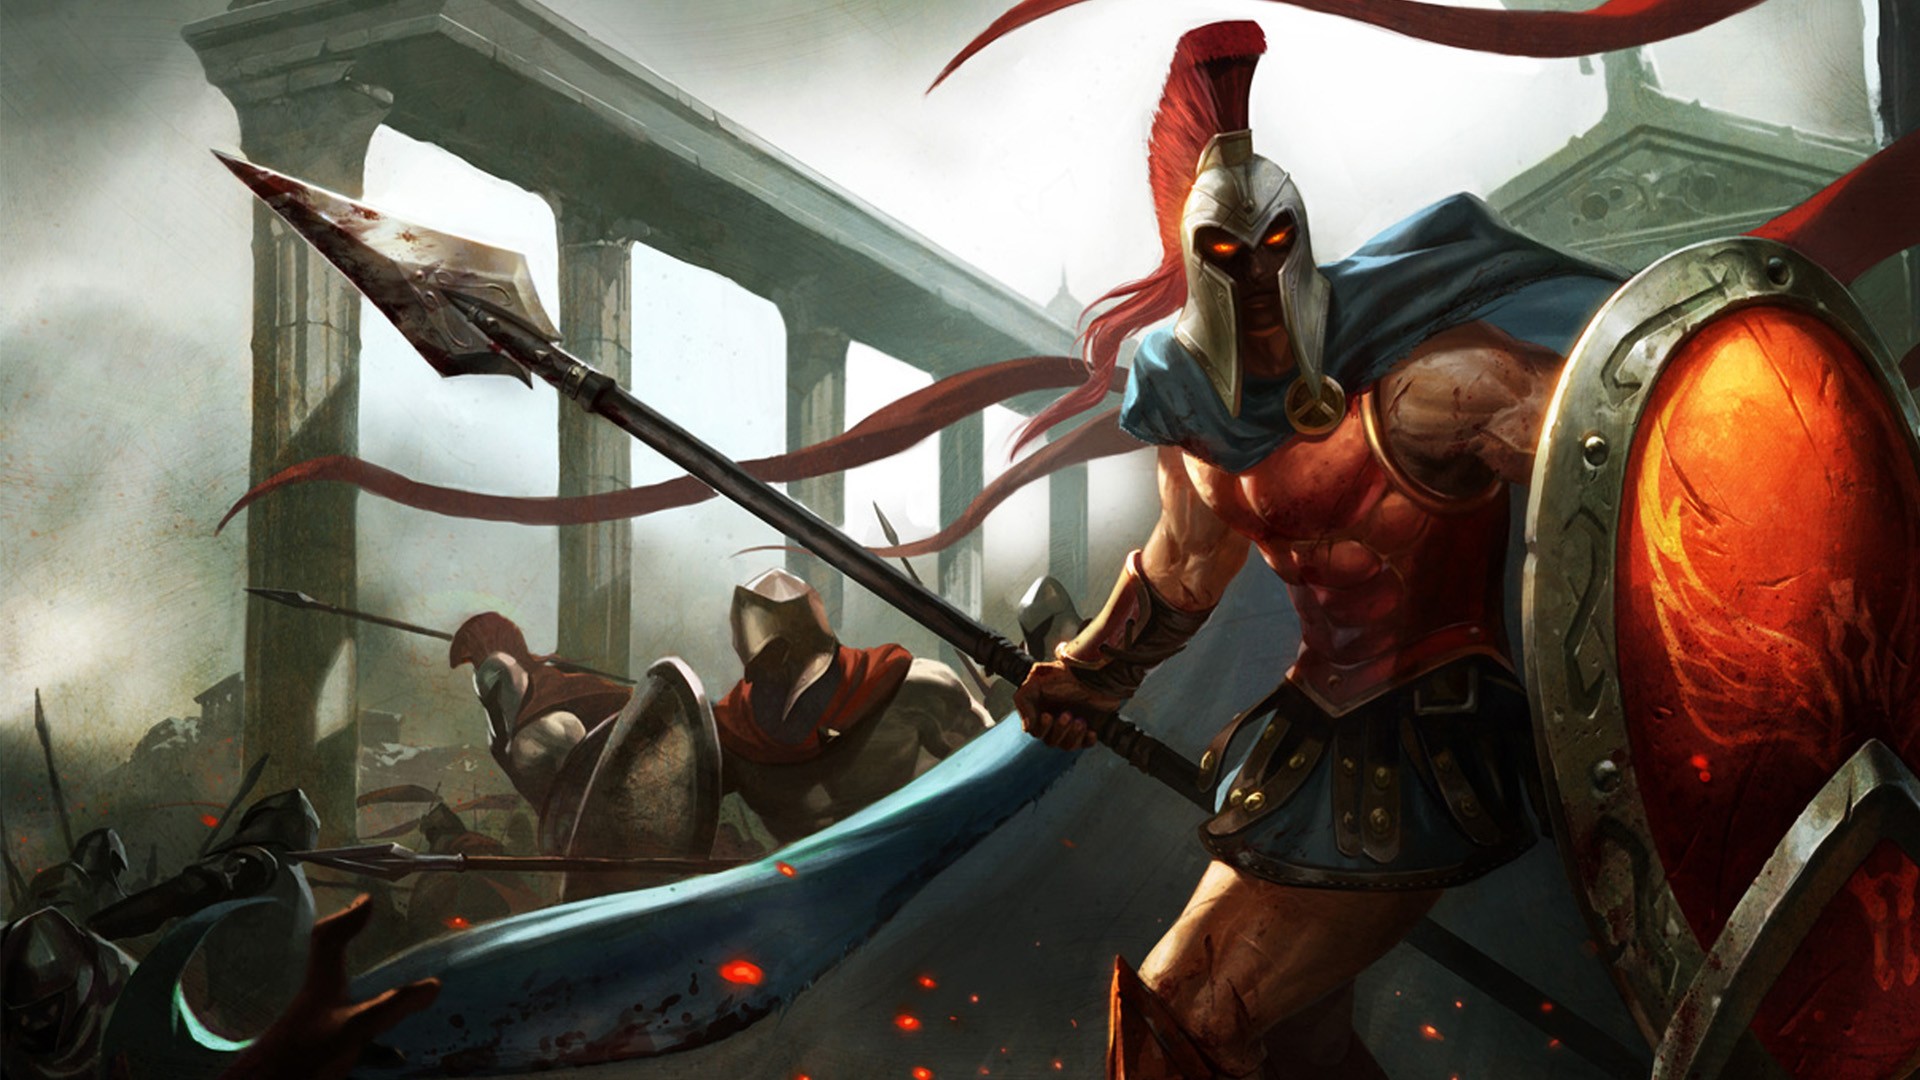 Wallpaper League of legends online game, spartan, warrior